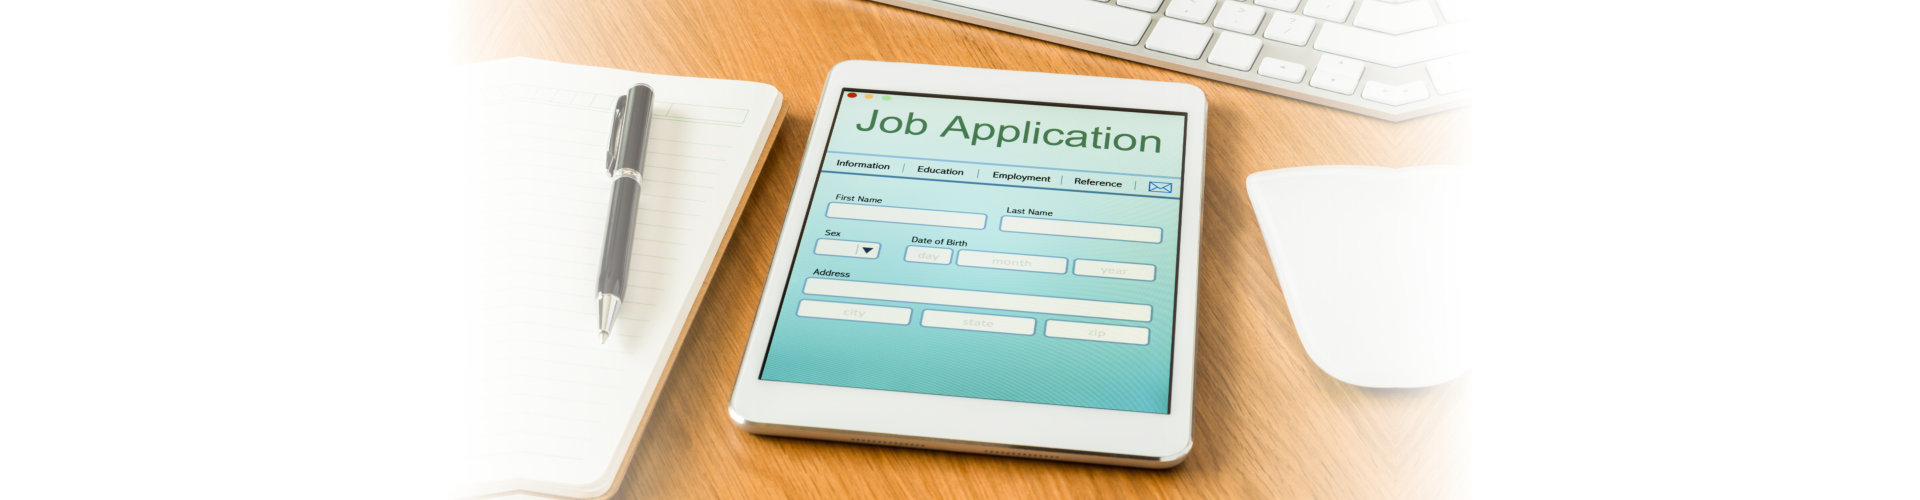 Modern digital tablet pc showing user interface of blank job application form